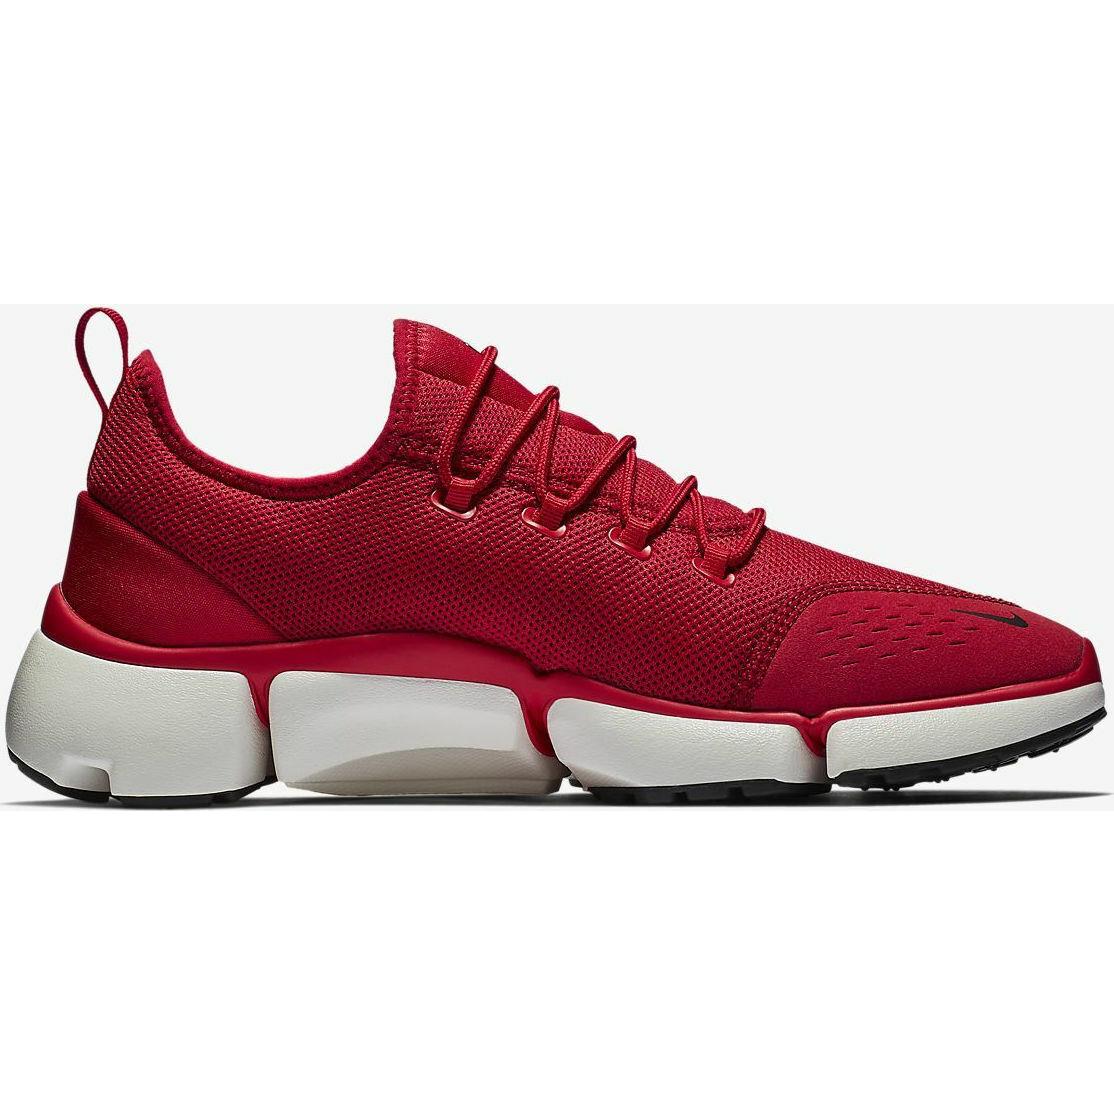 Nike Pocket Fly DM Size 10.5 TO 12.0 University Red Comfortable | 883212531605 Nike shoes - University Red, Black, White |